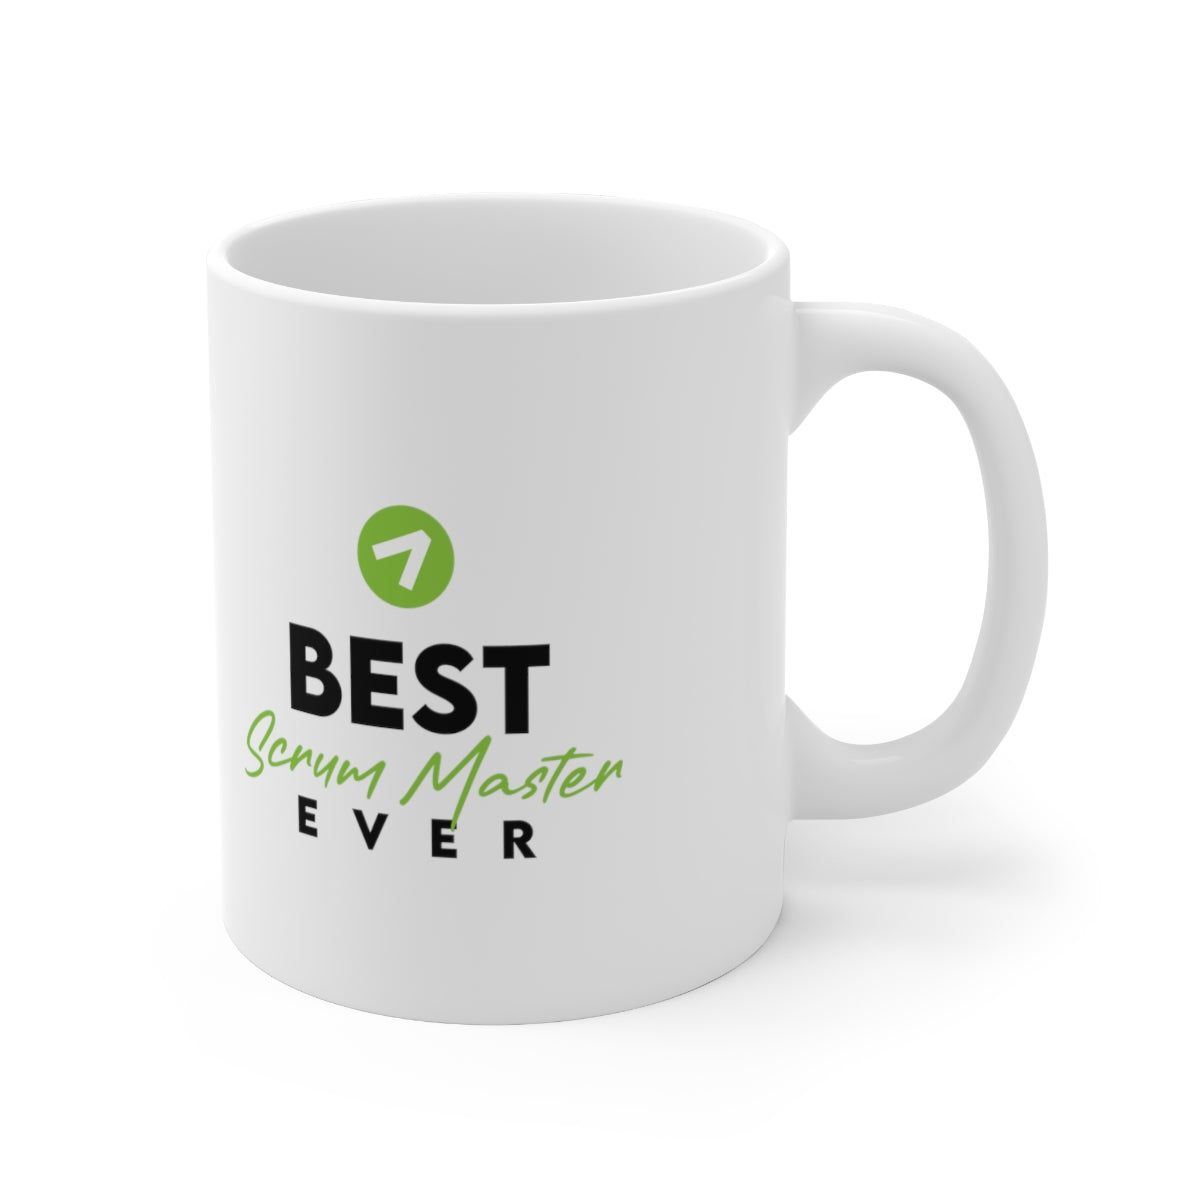 Best Scrum Master ever - Green - Ceramic Mug 11oz